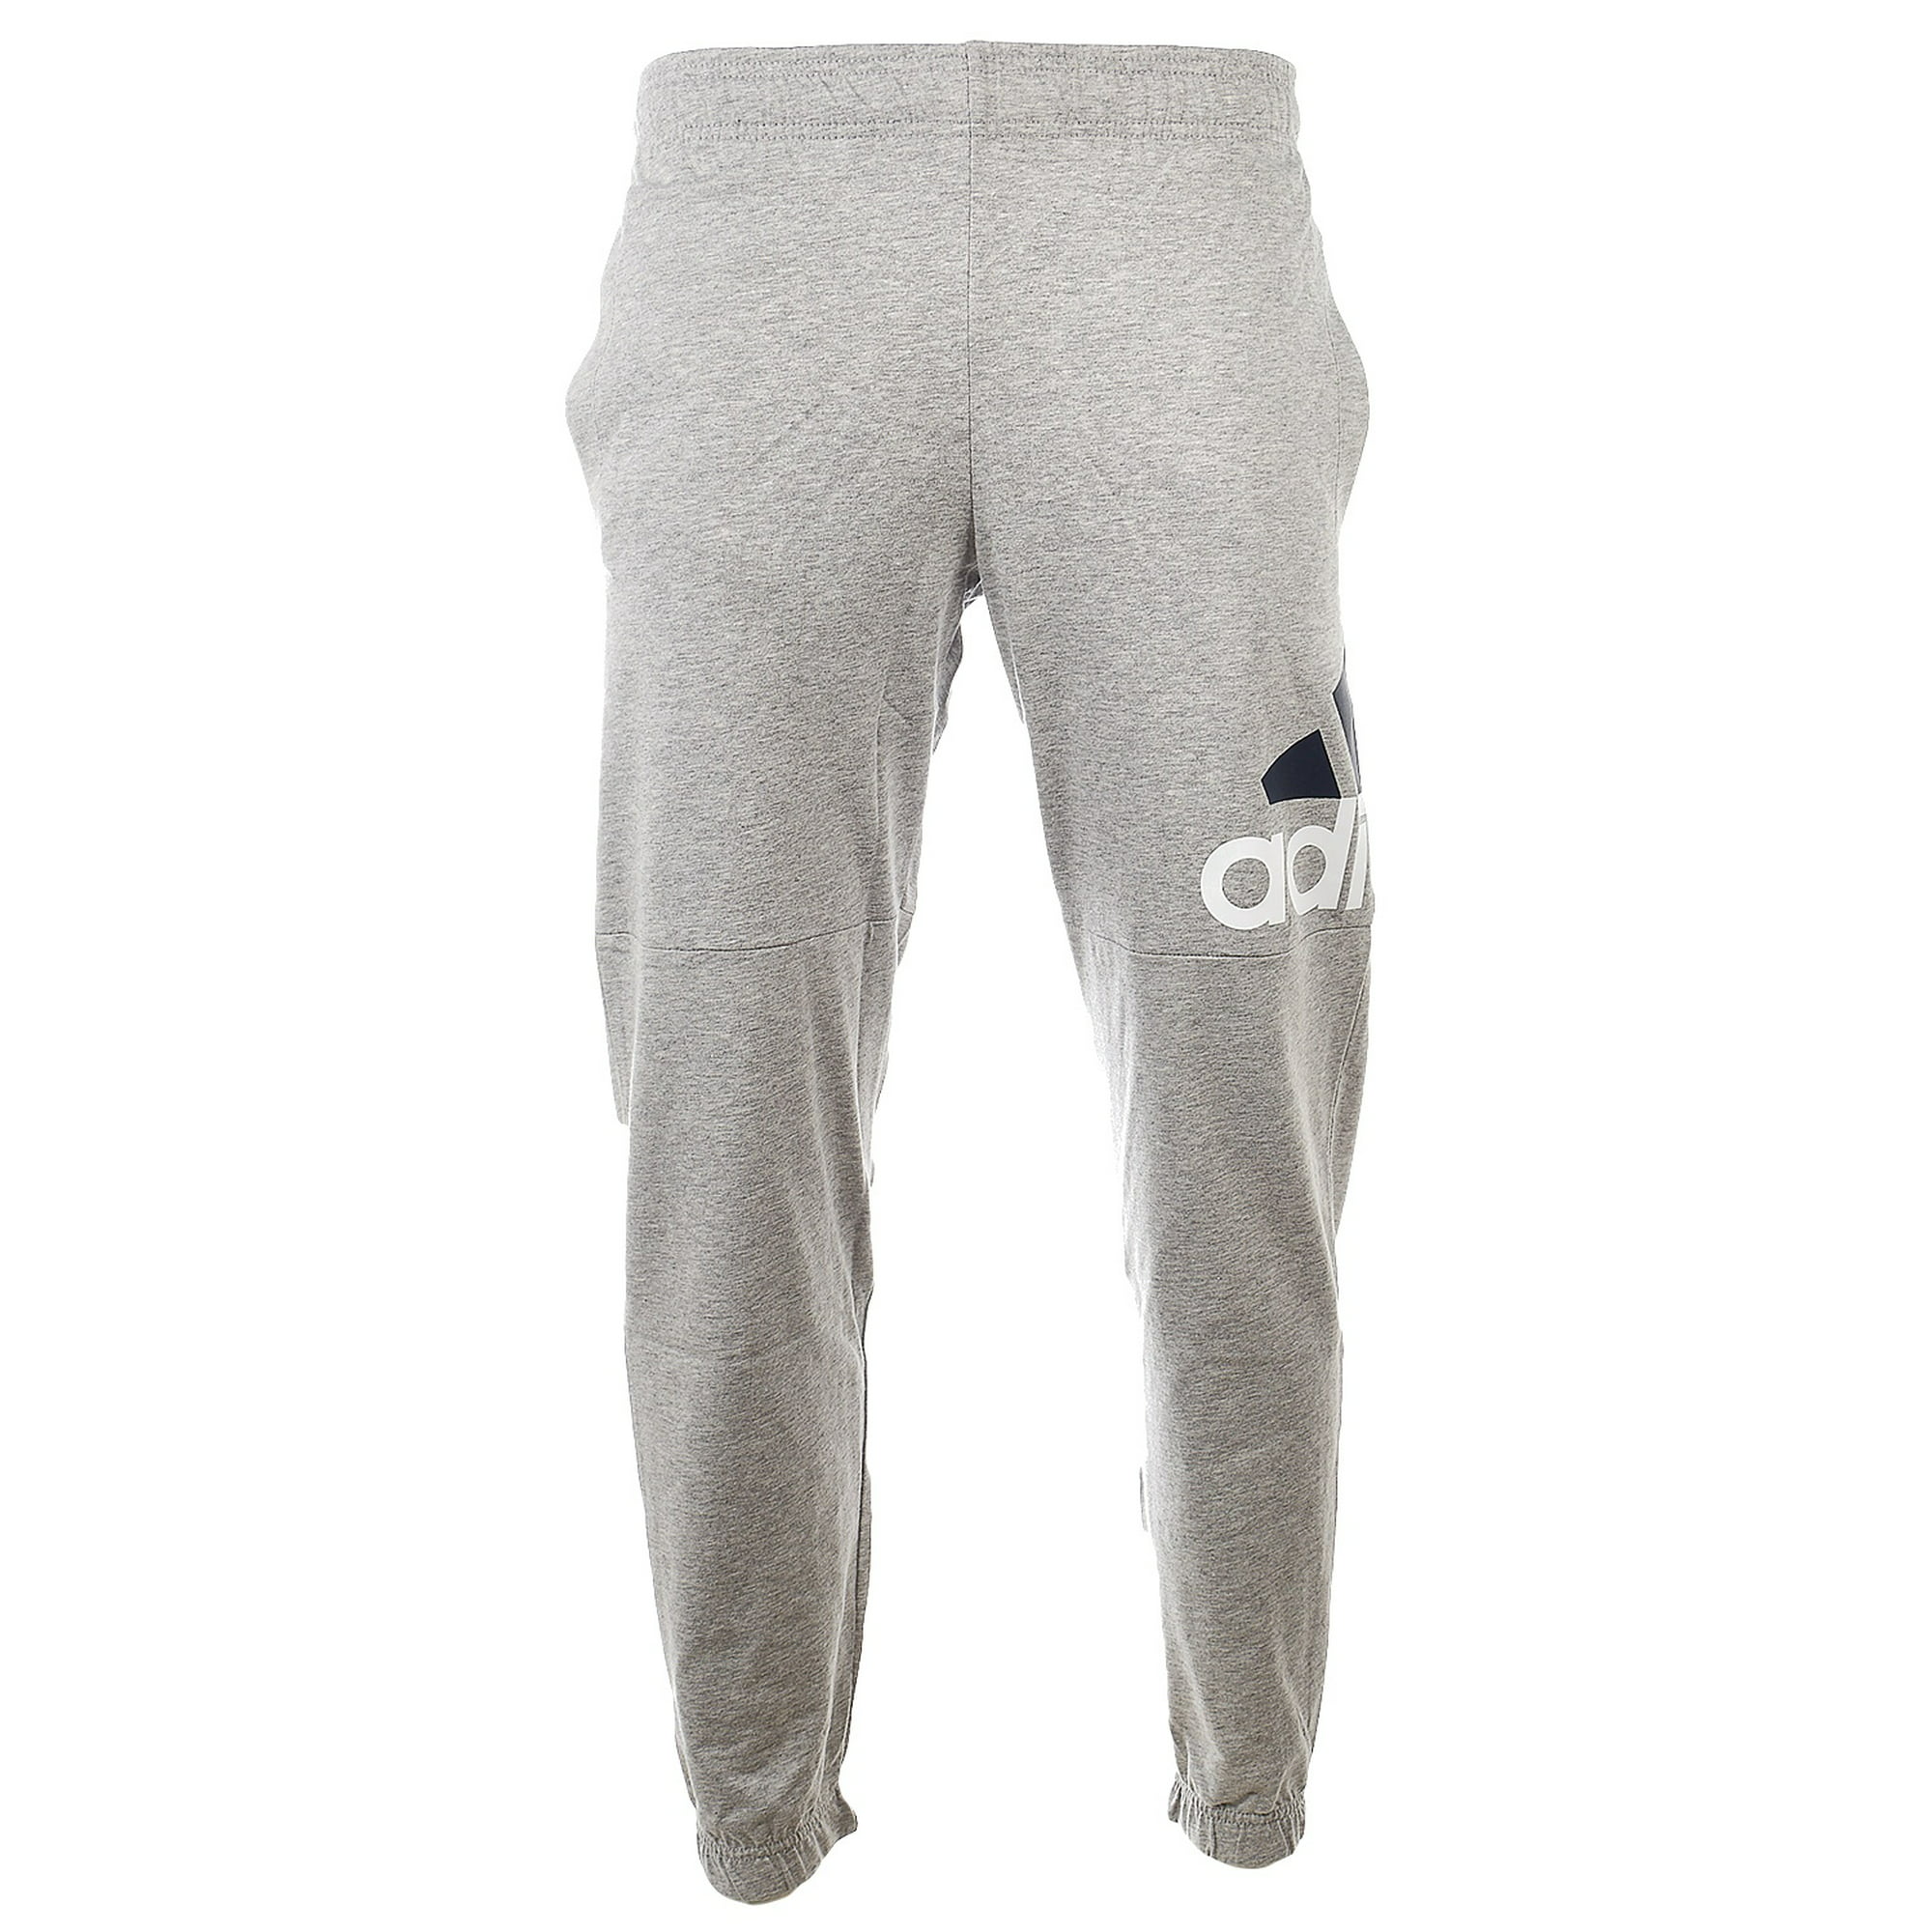 Adidas Essentials Pants - Medium Grey Heather/White/Black - Mens - S -